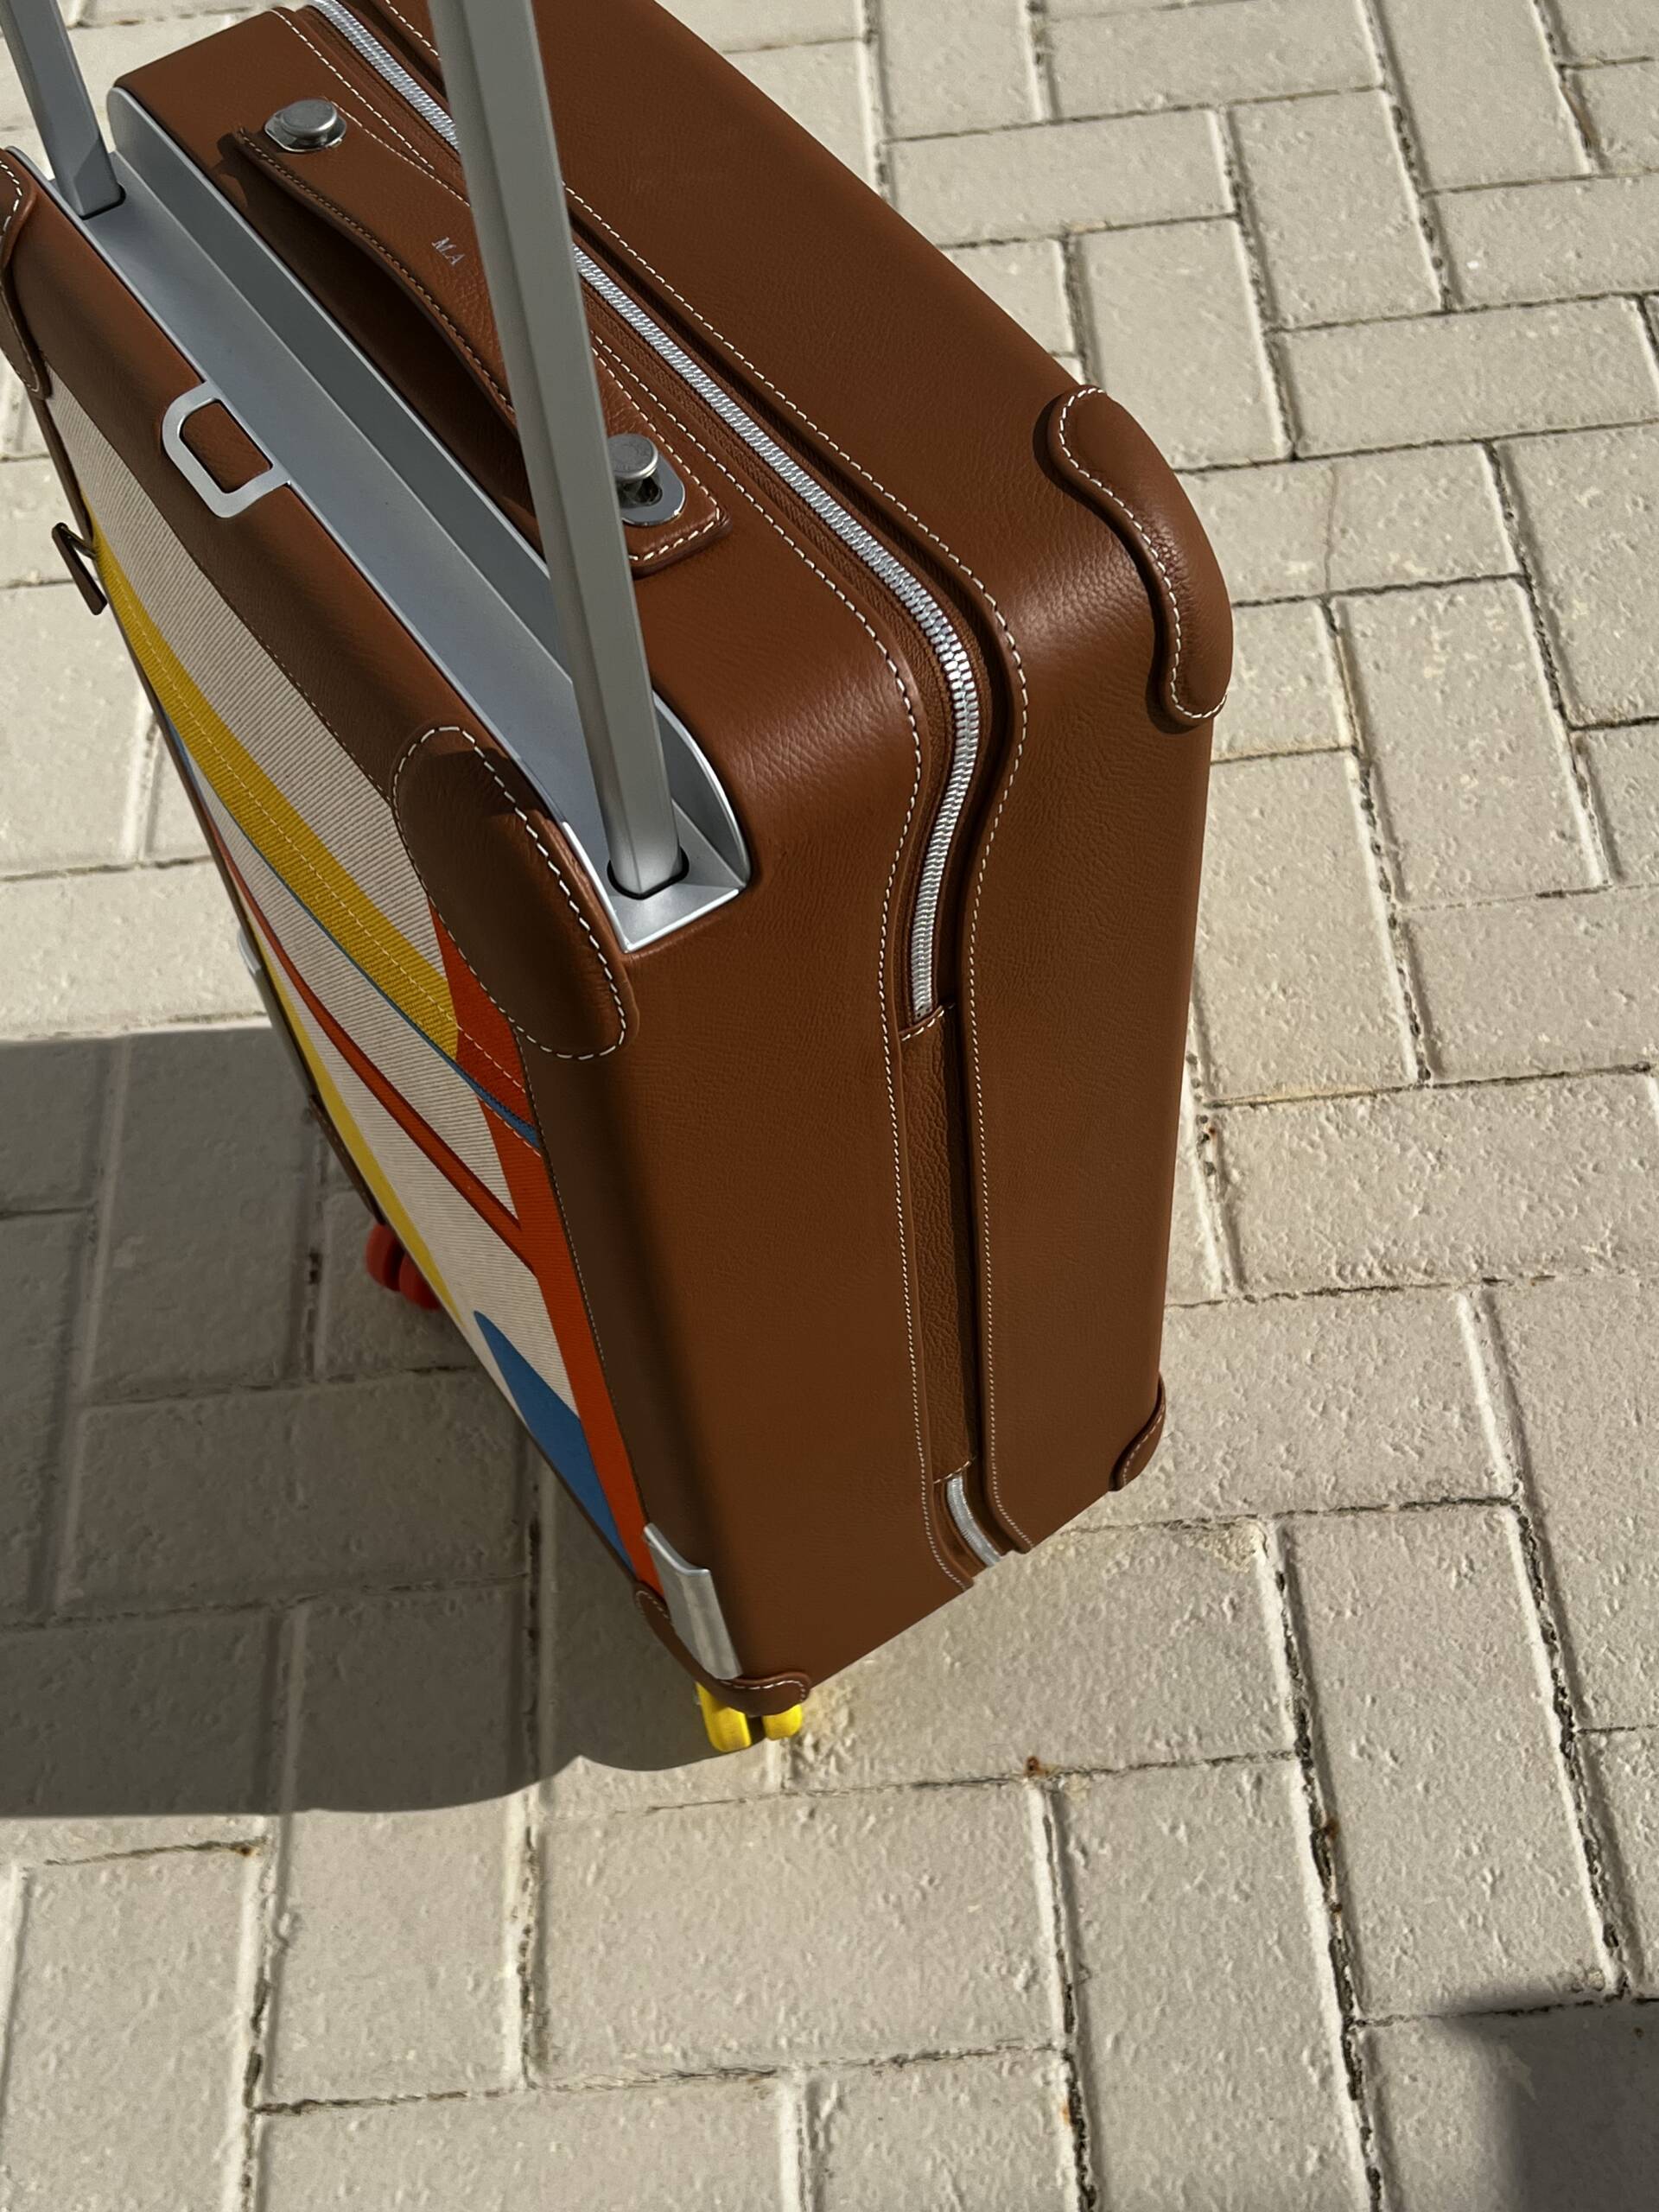 R.M.S luggage carry on Bag ✨👌🏻 #hermes #hermesrms